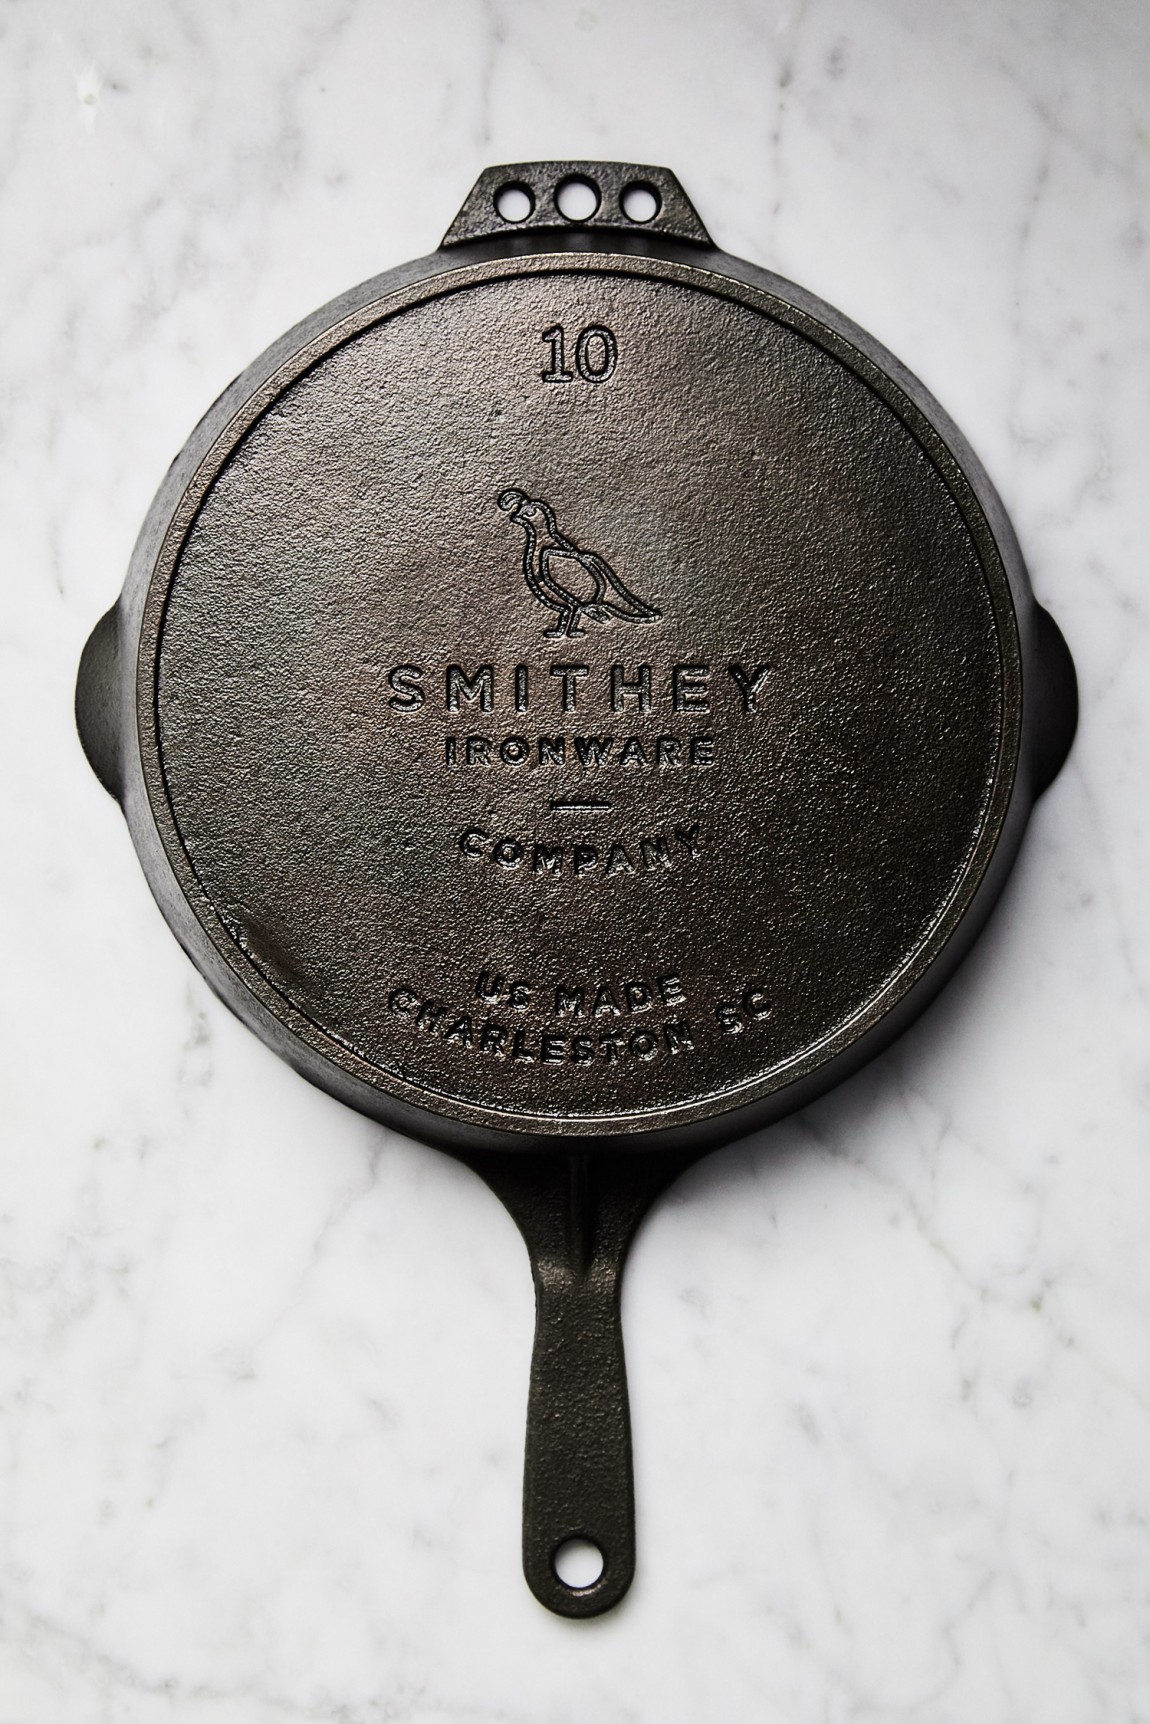 Smithey厨具品牌VI设计